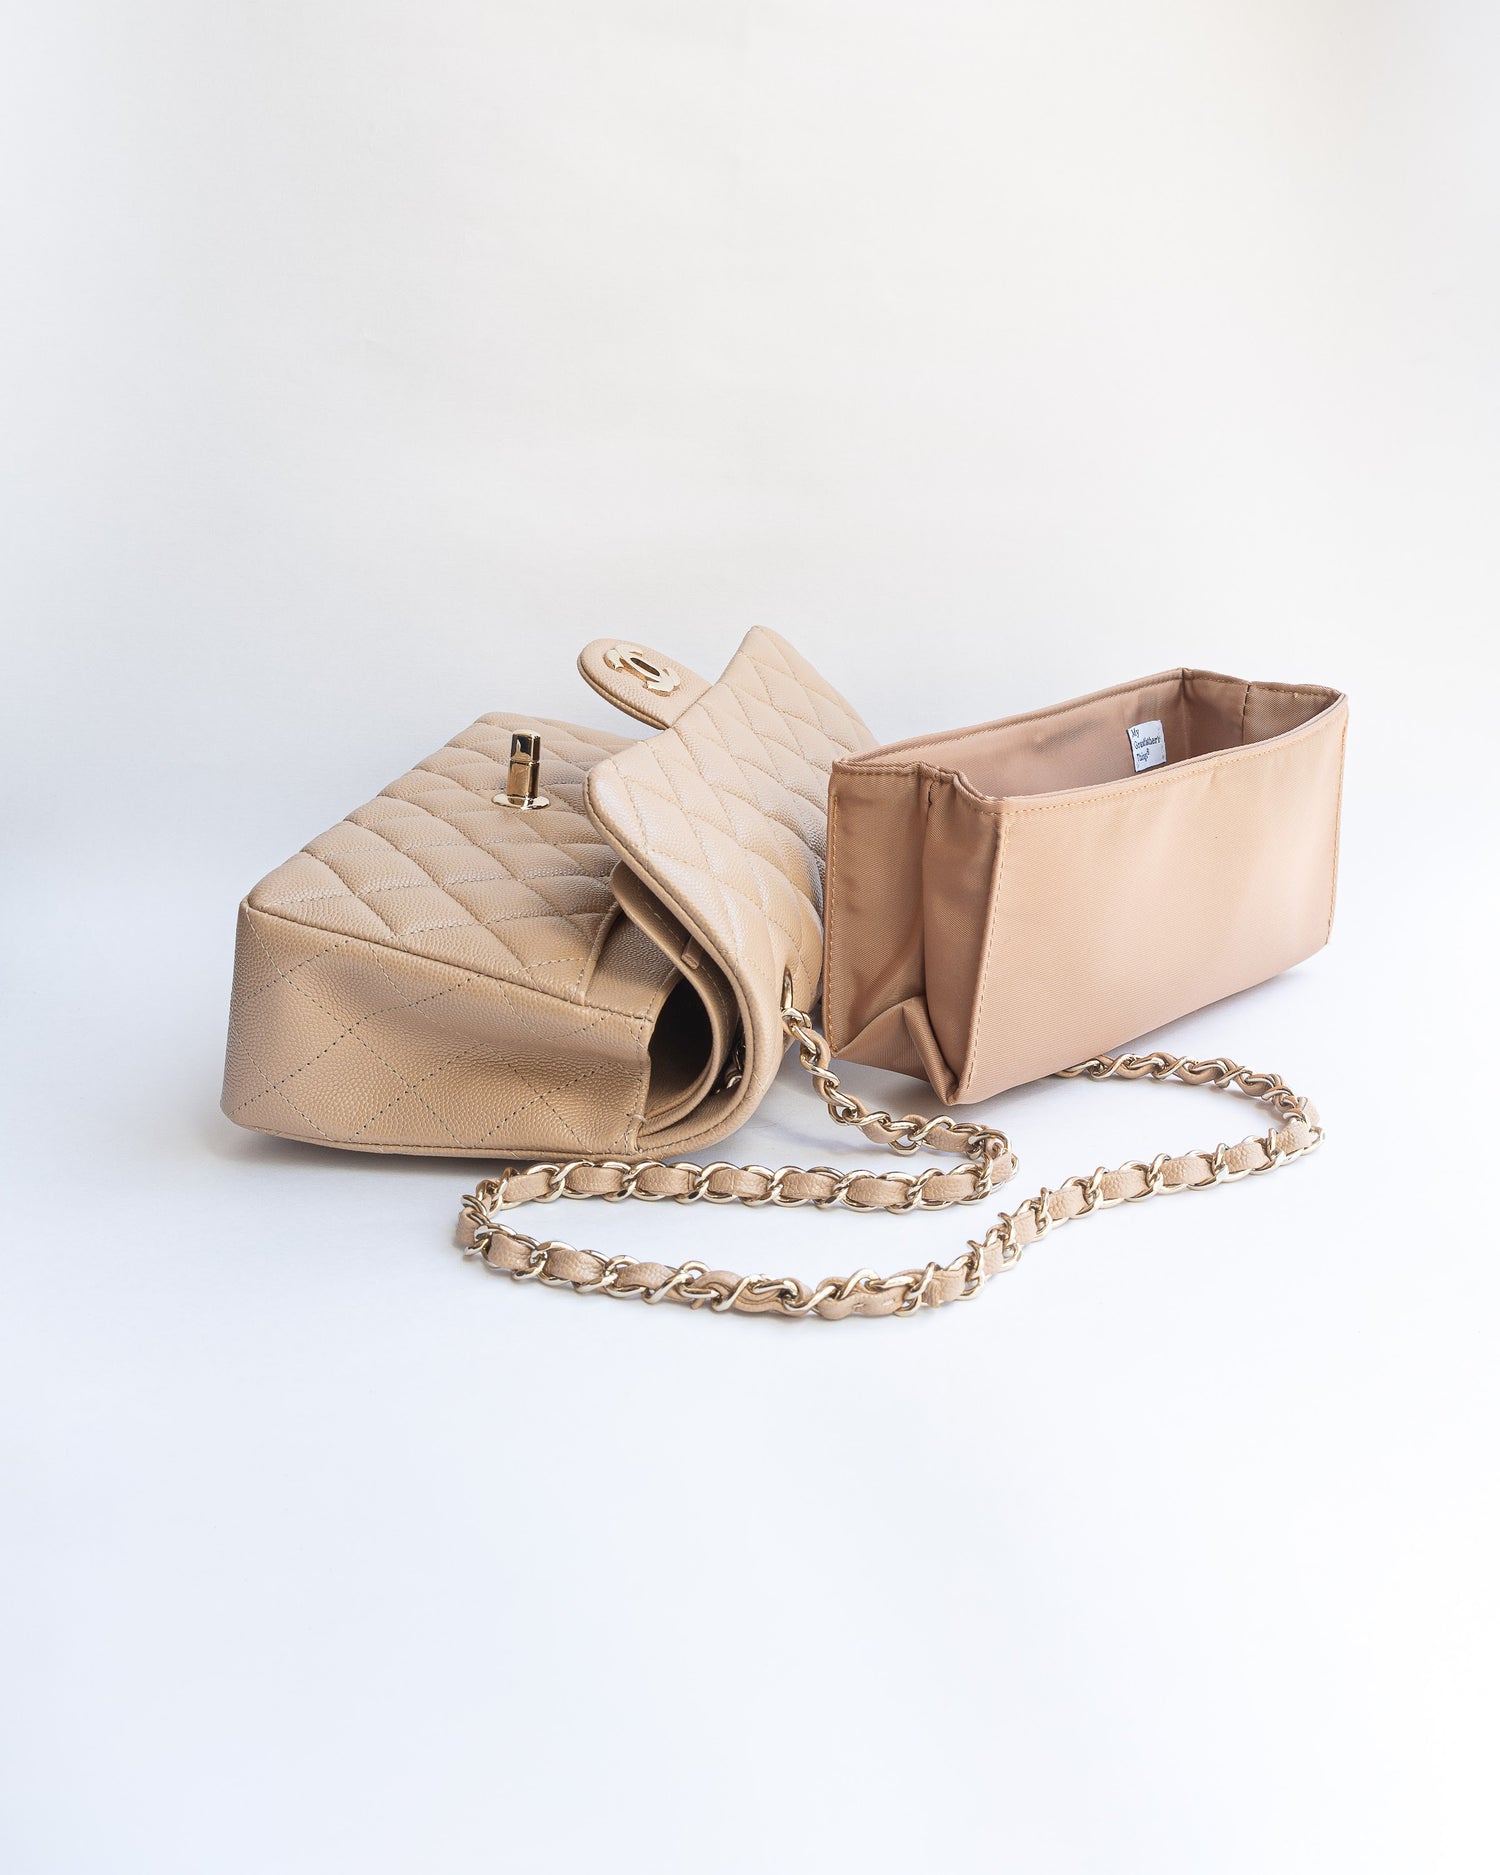 Lionel, the chanel handbag liner/ chanel handbag organizer – My